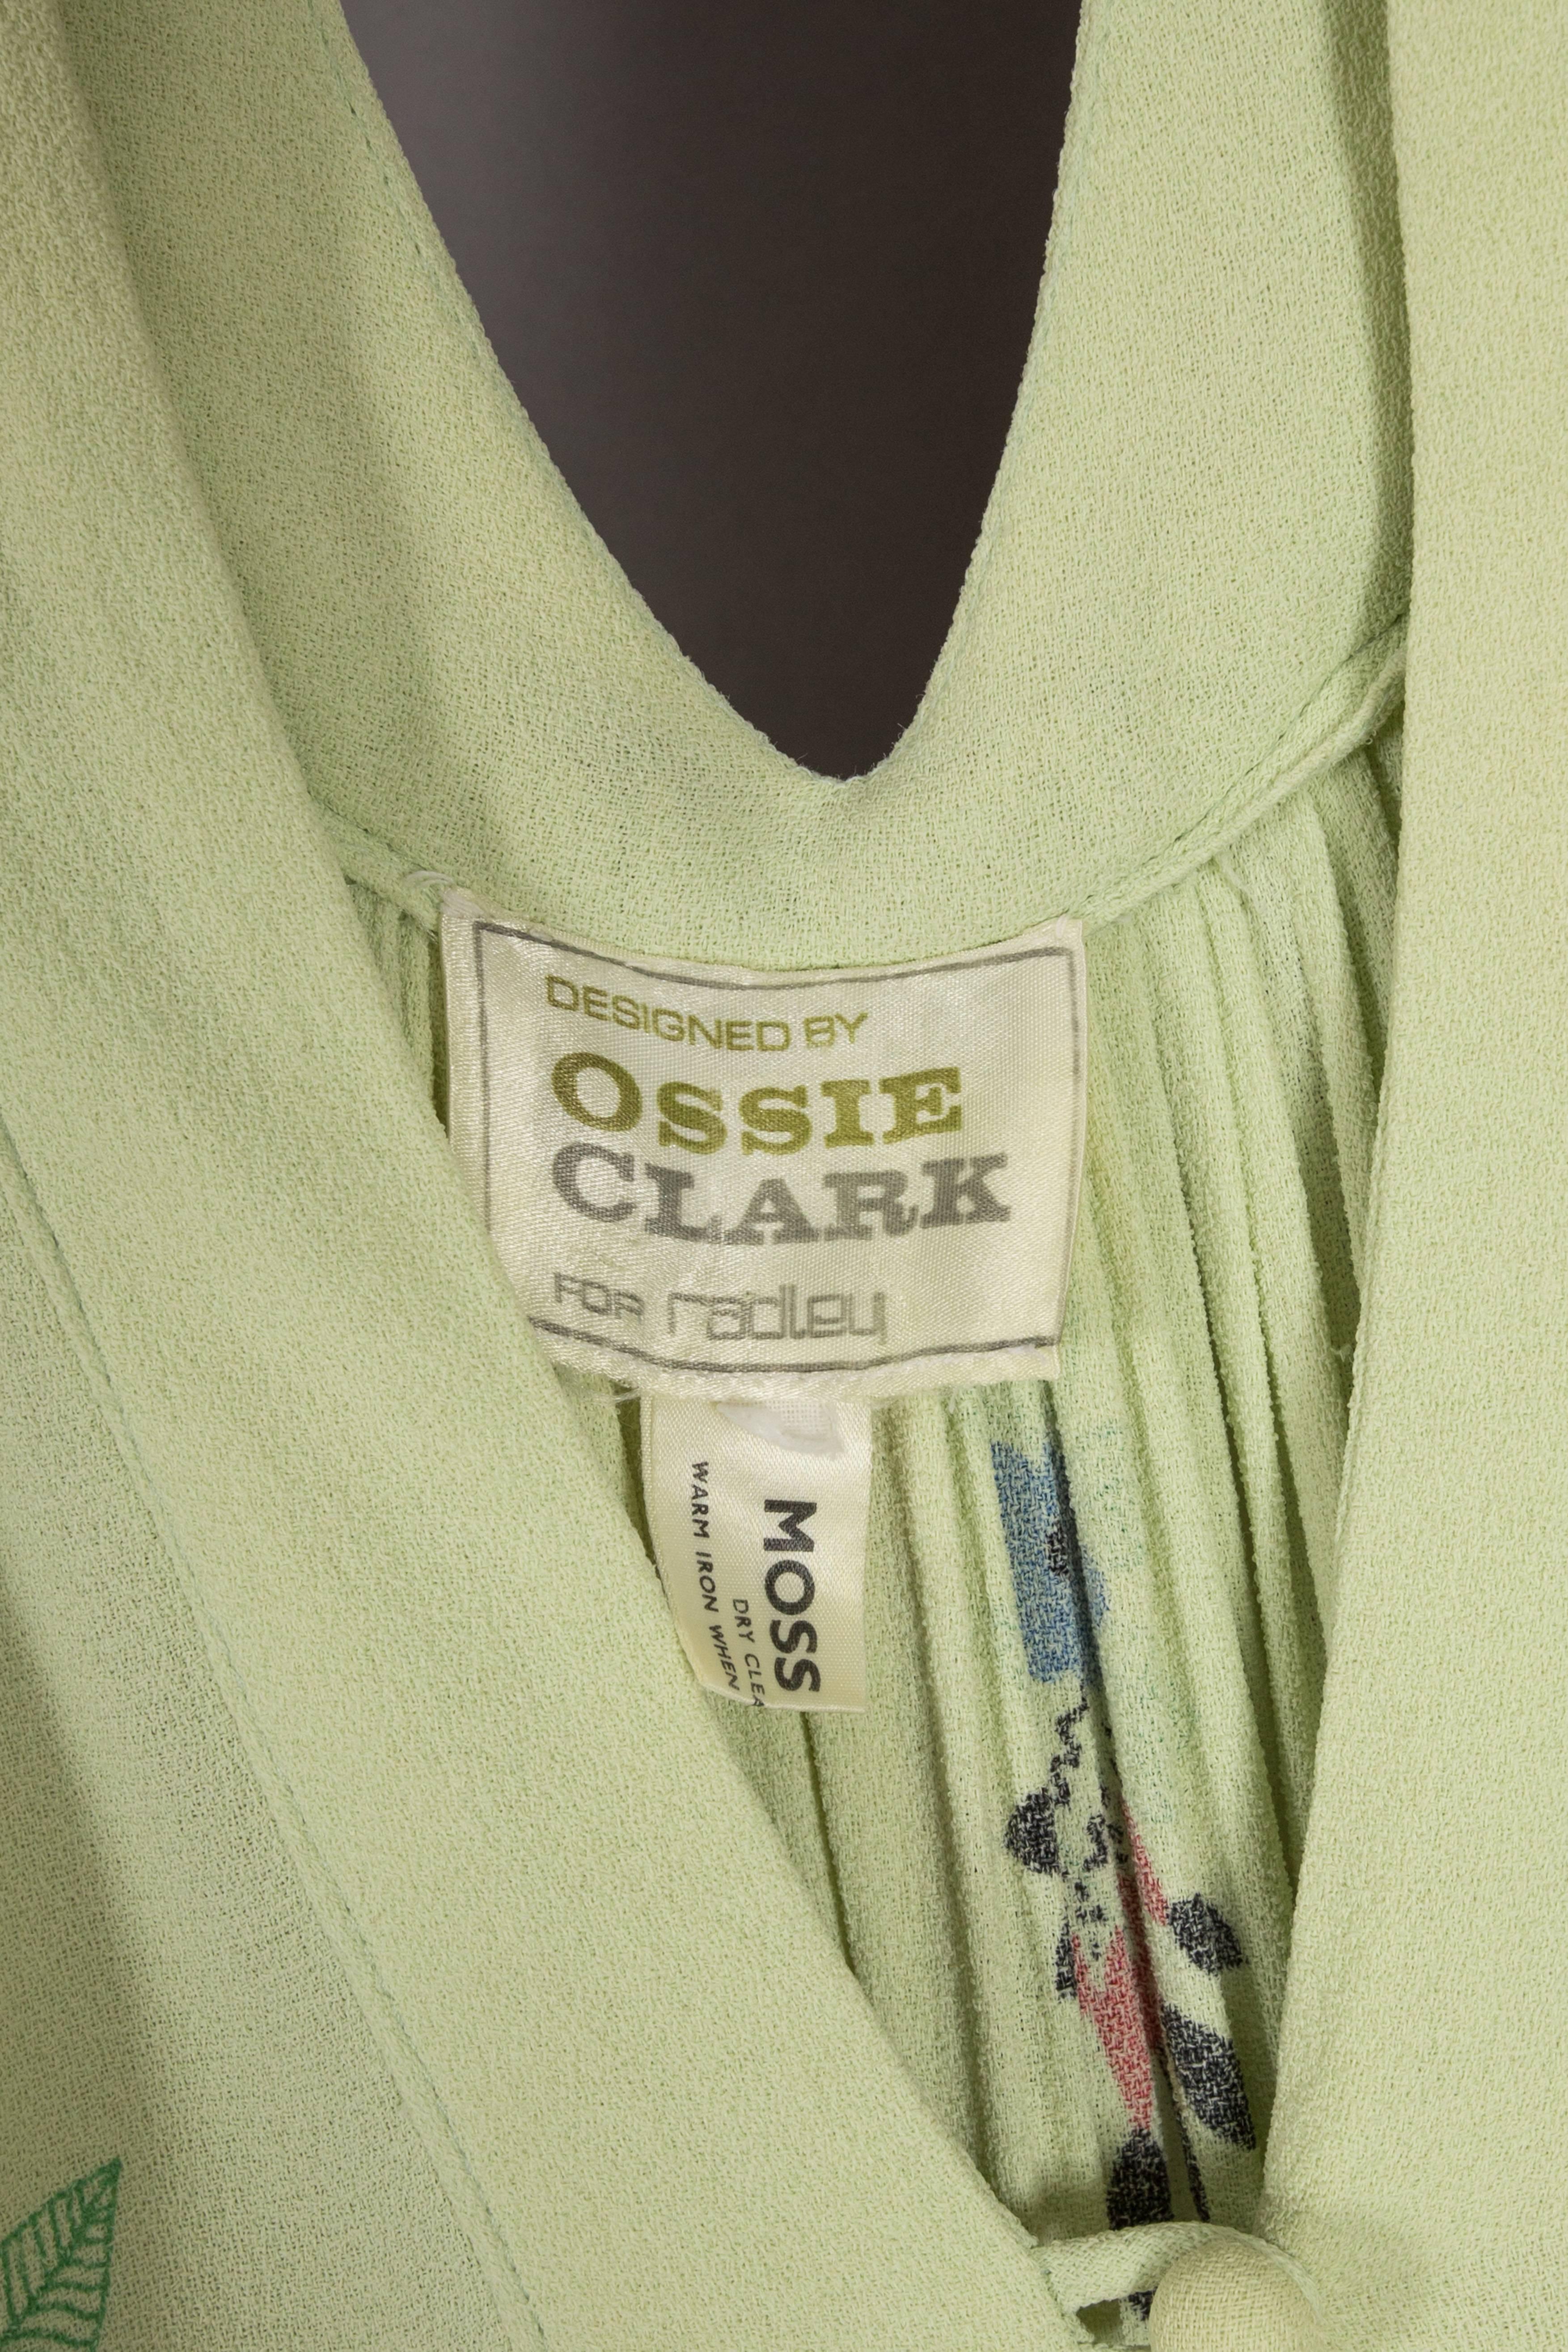 Ossie Clark moss crepe maxi dress with Celia Birtwell print, circa 1970s 5